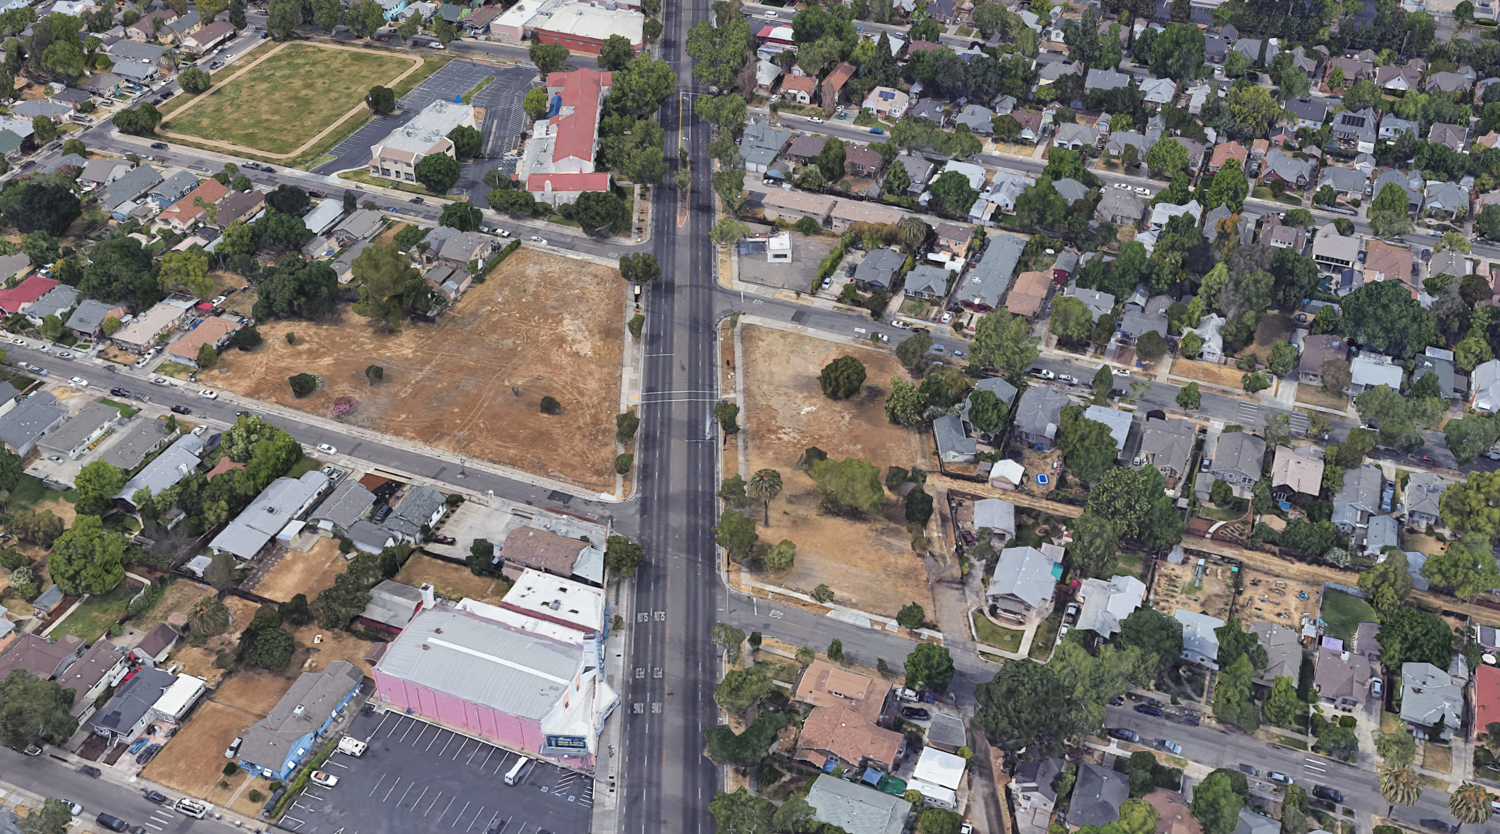 4601 10th Avenue and 3441 Stockton Boulevard, image via Google Satellite